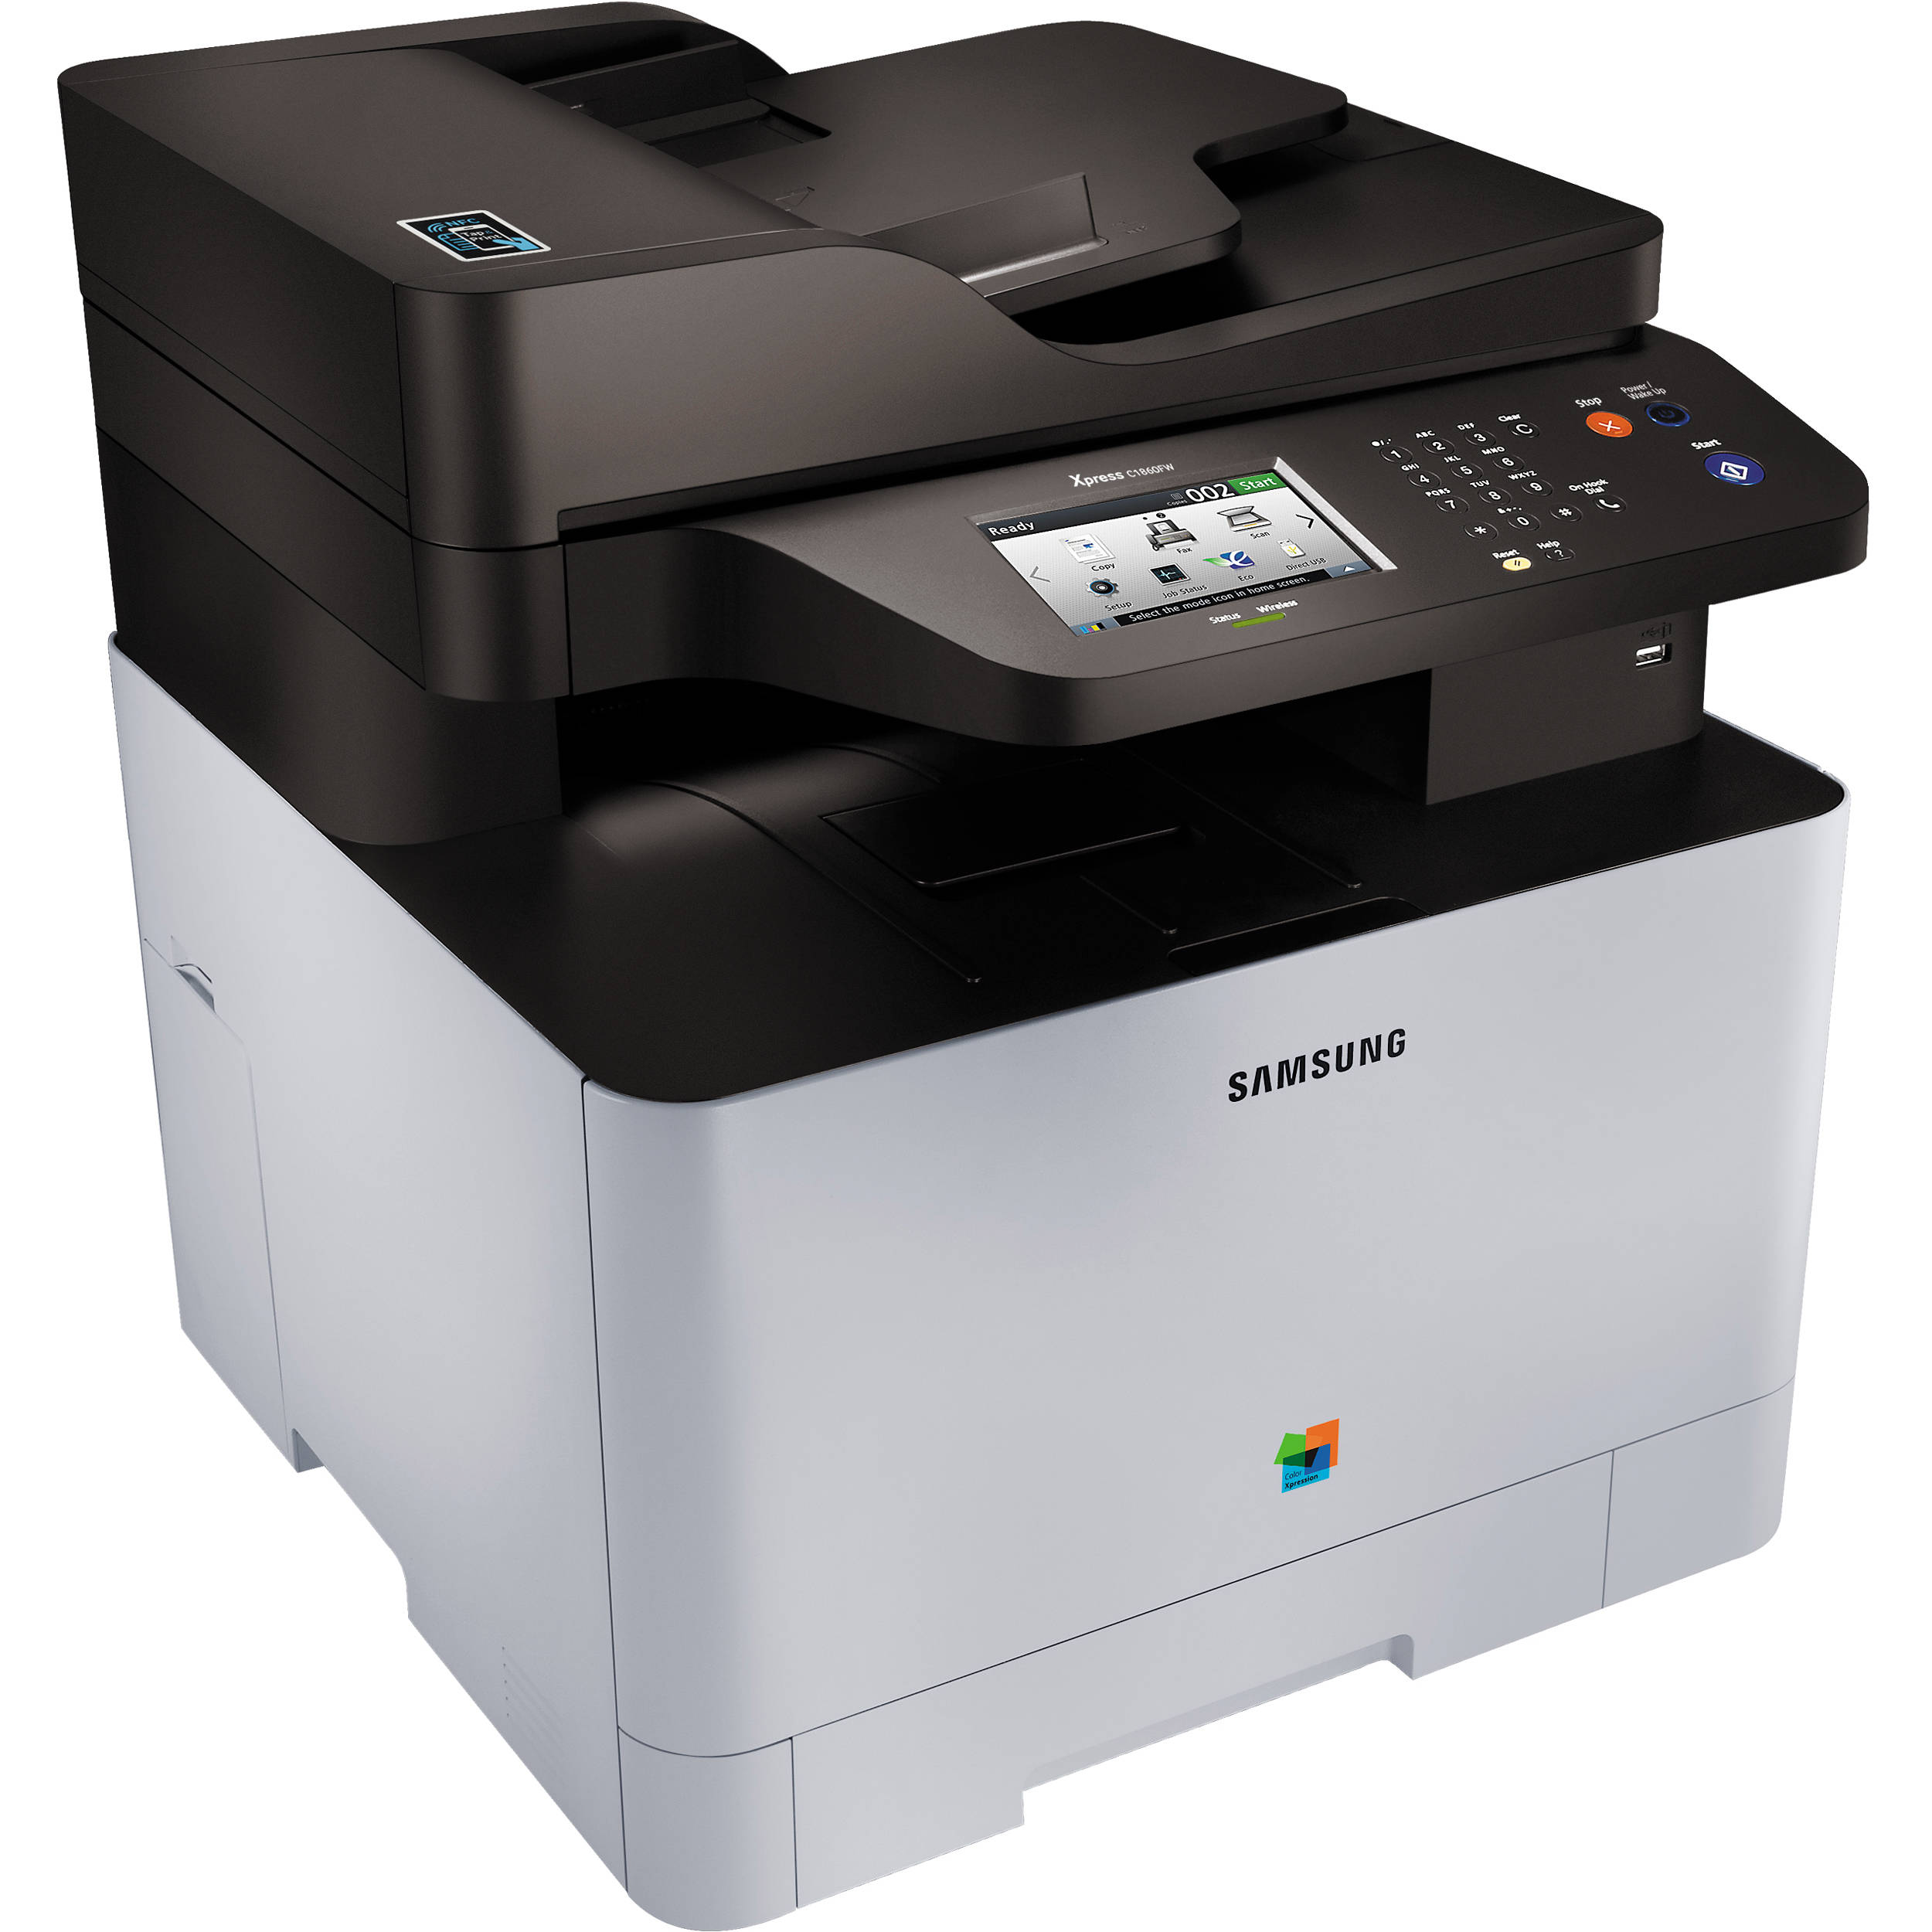 samsung printer xpress c1860fw manual